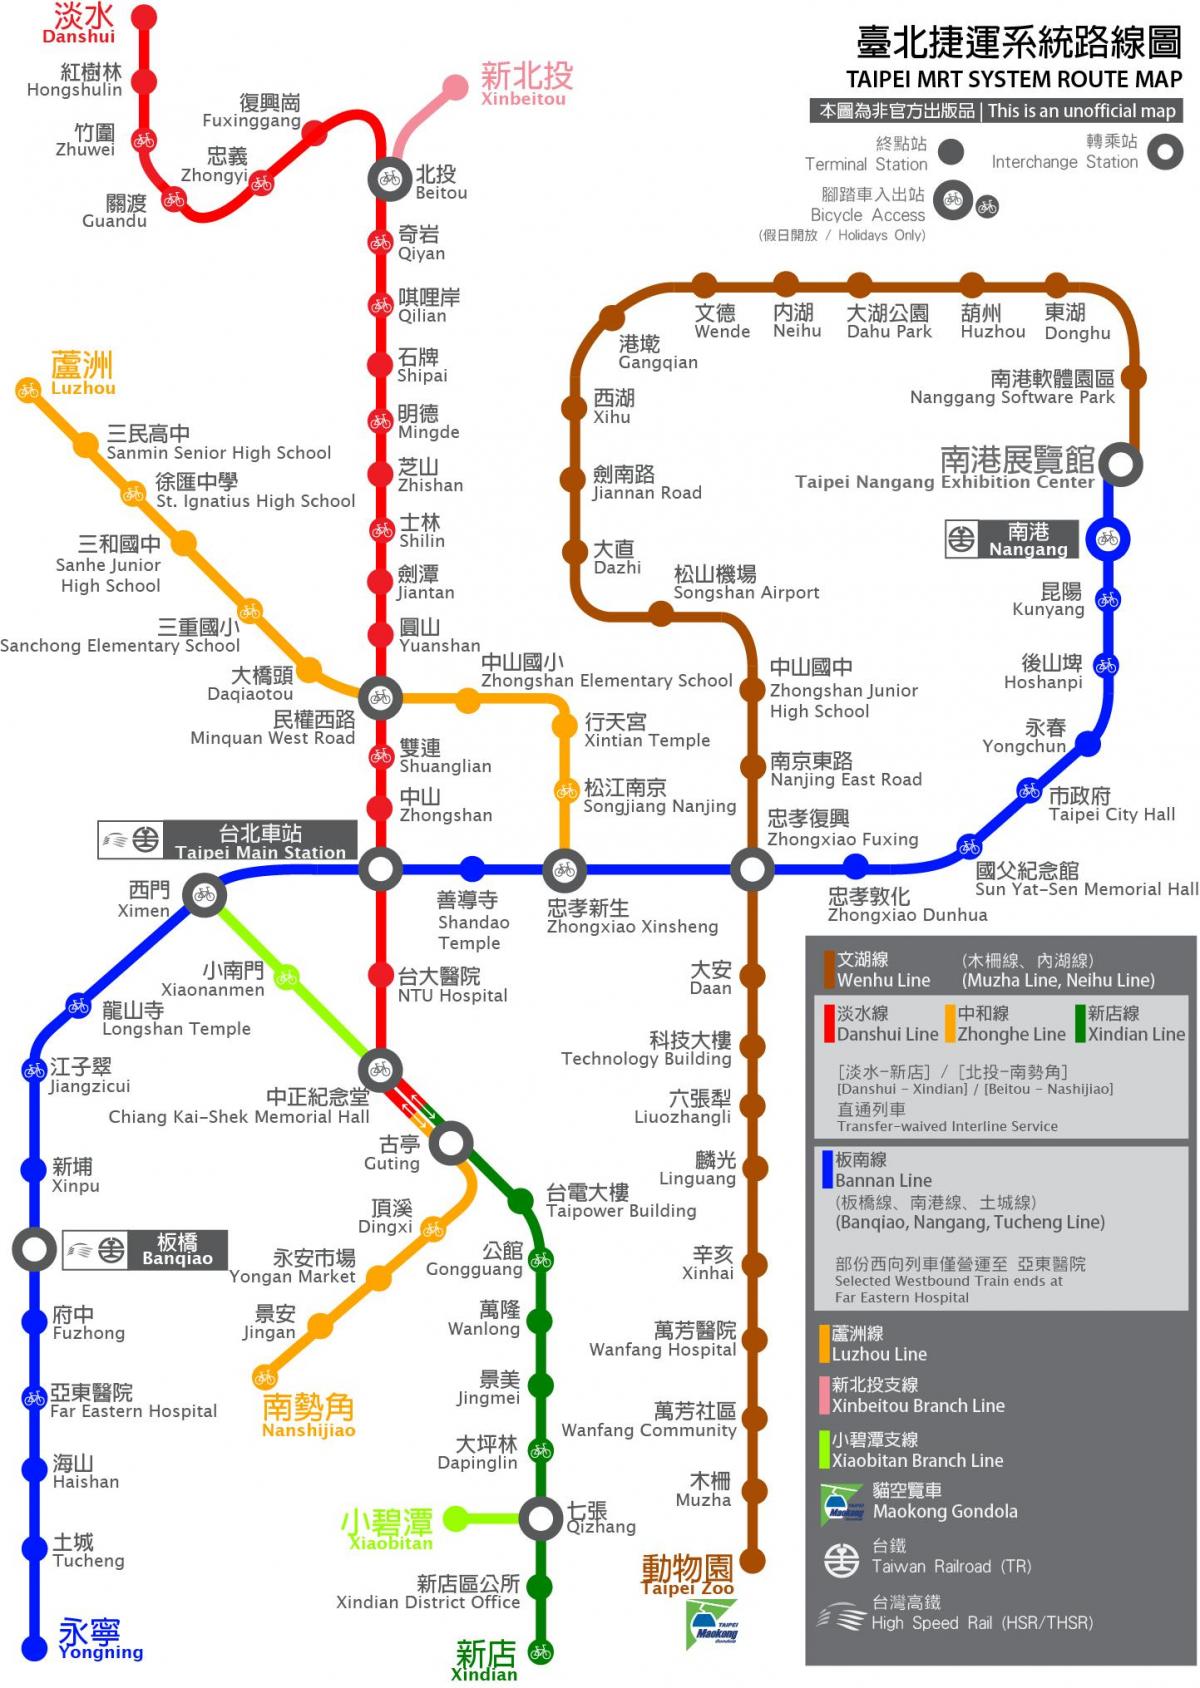 thsr ताइपे स्टेशन का नक्शा